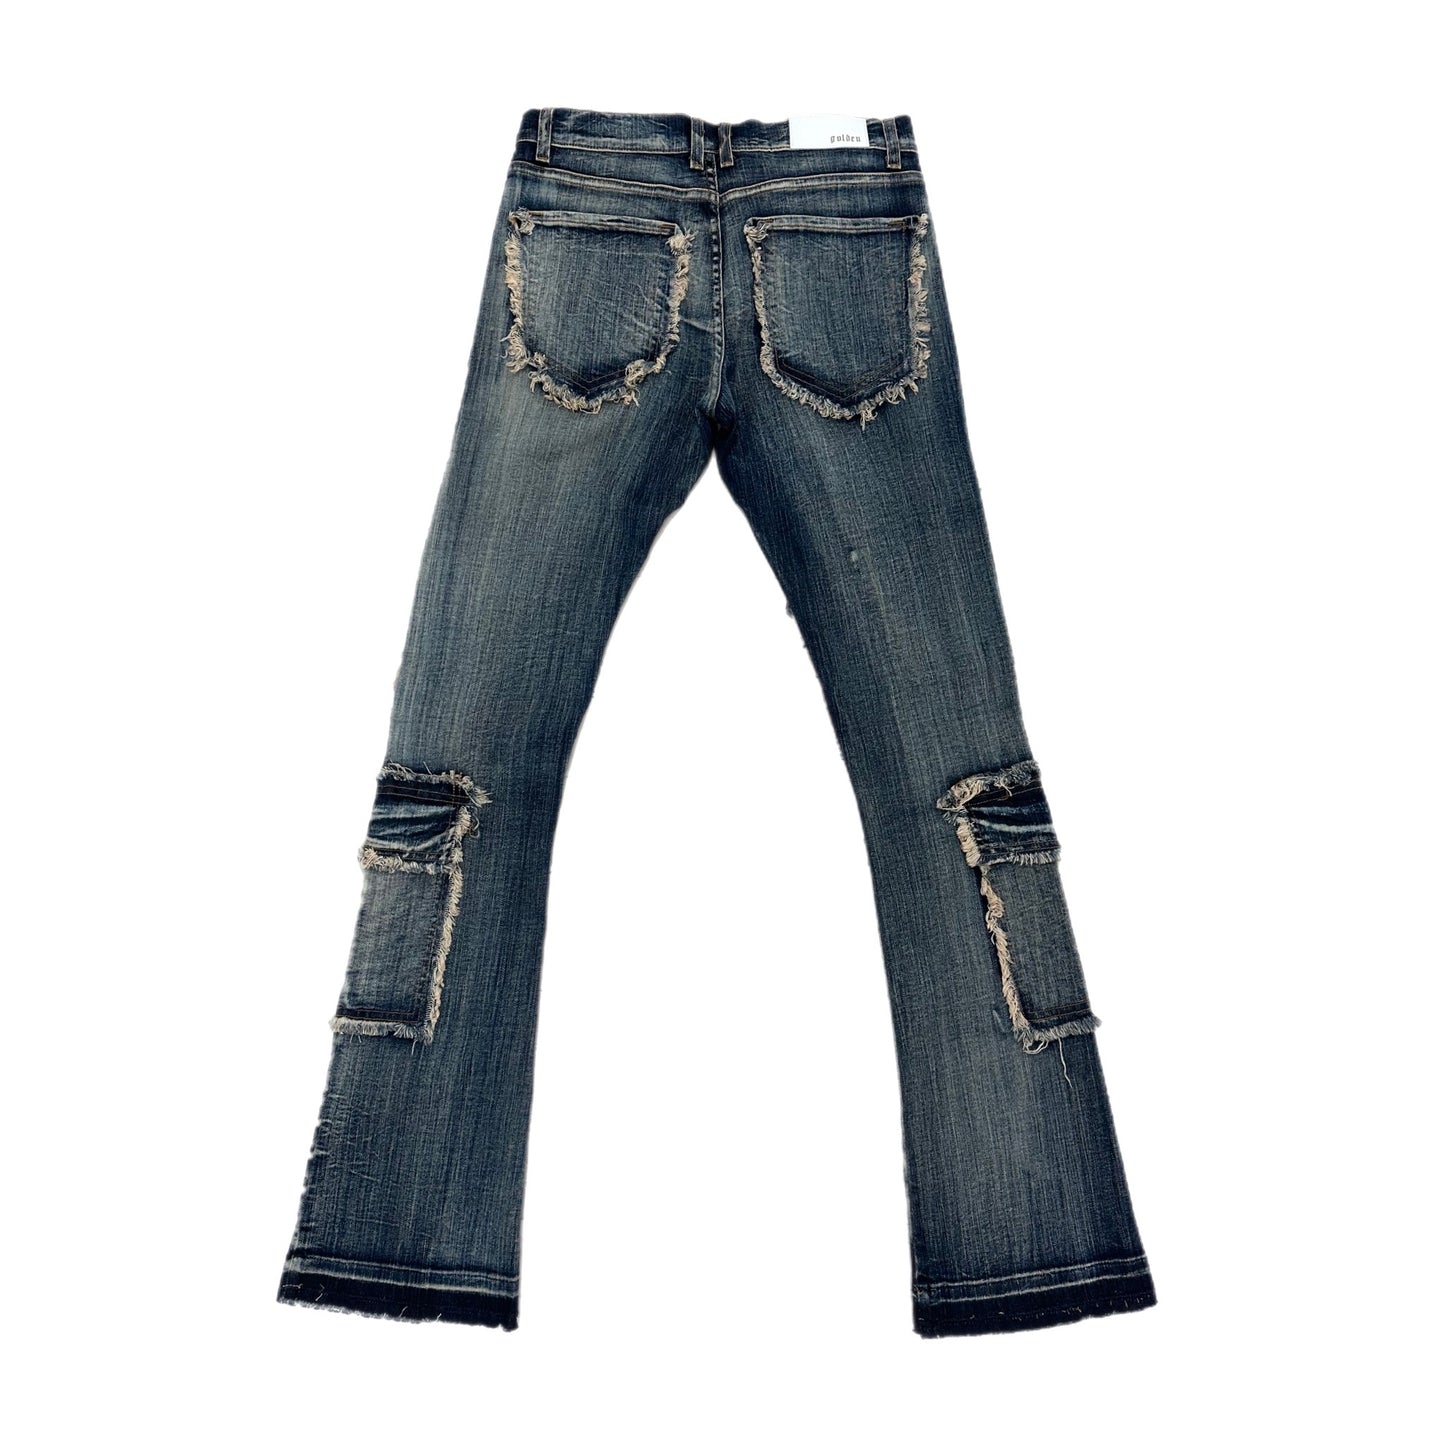 Golden denim Multi Pocket Cargo Jeans